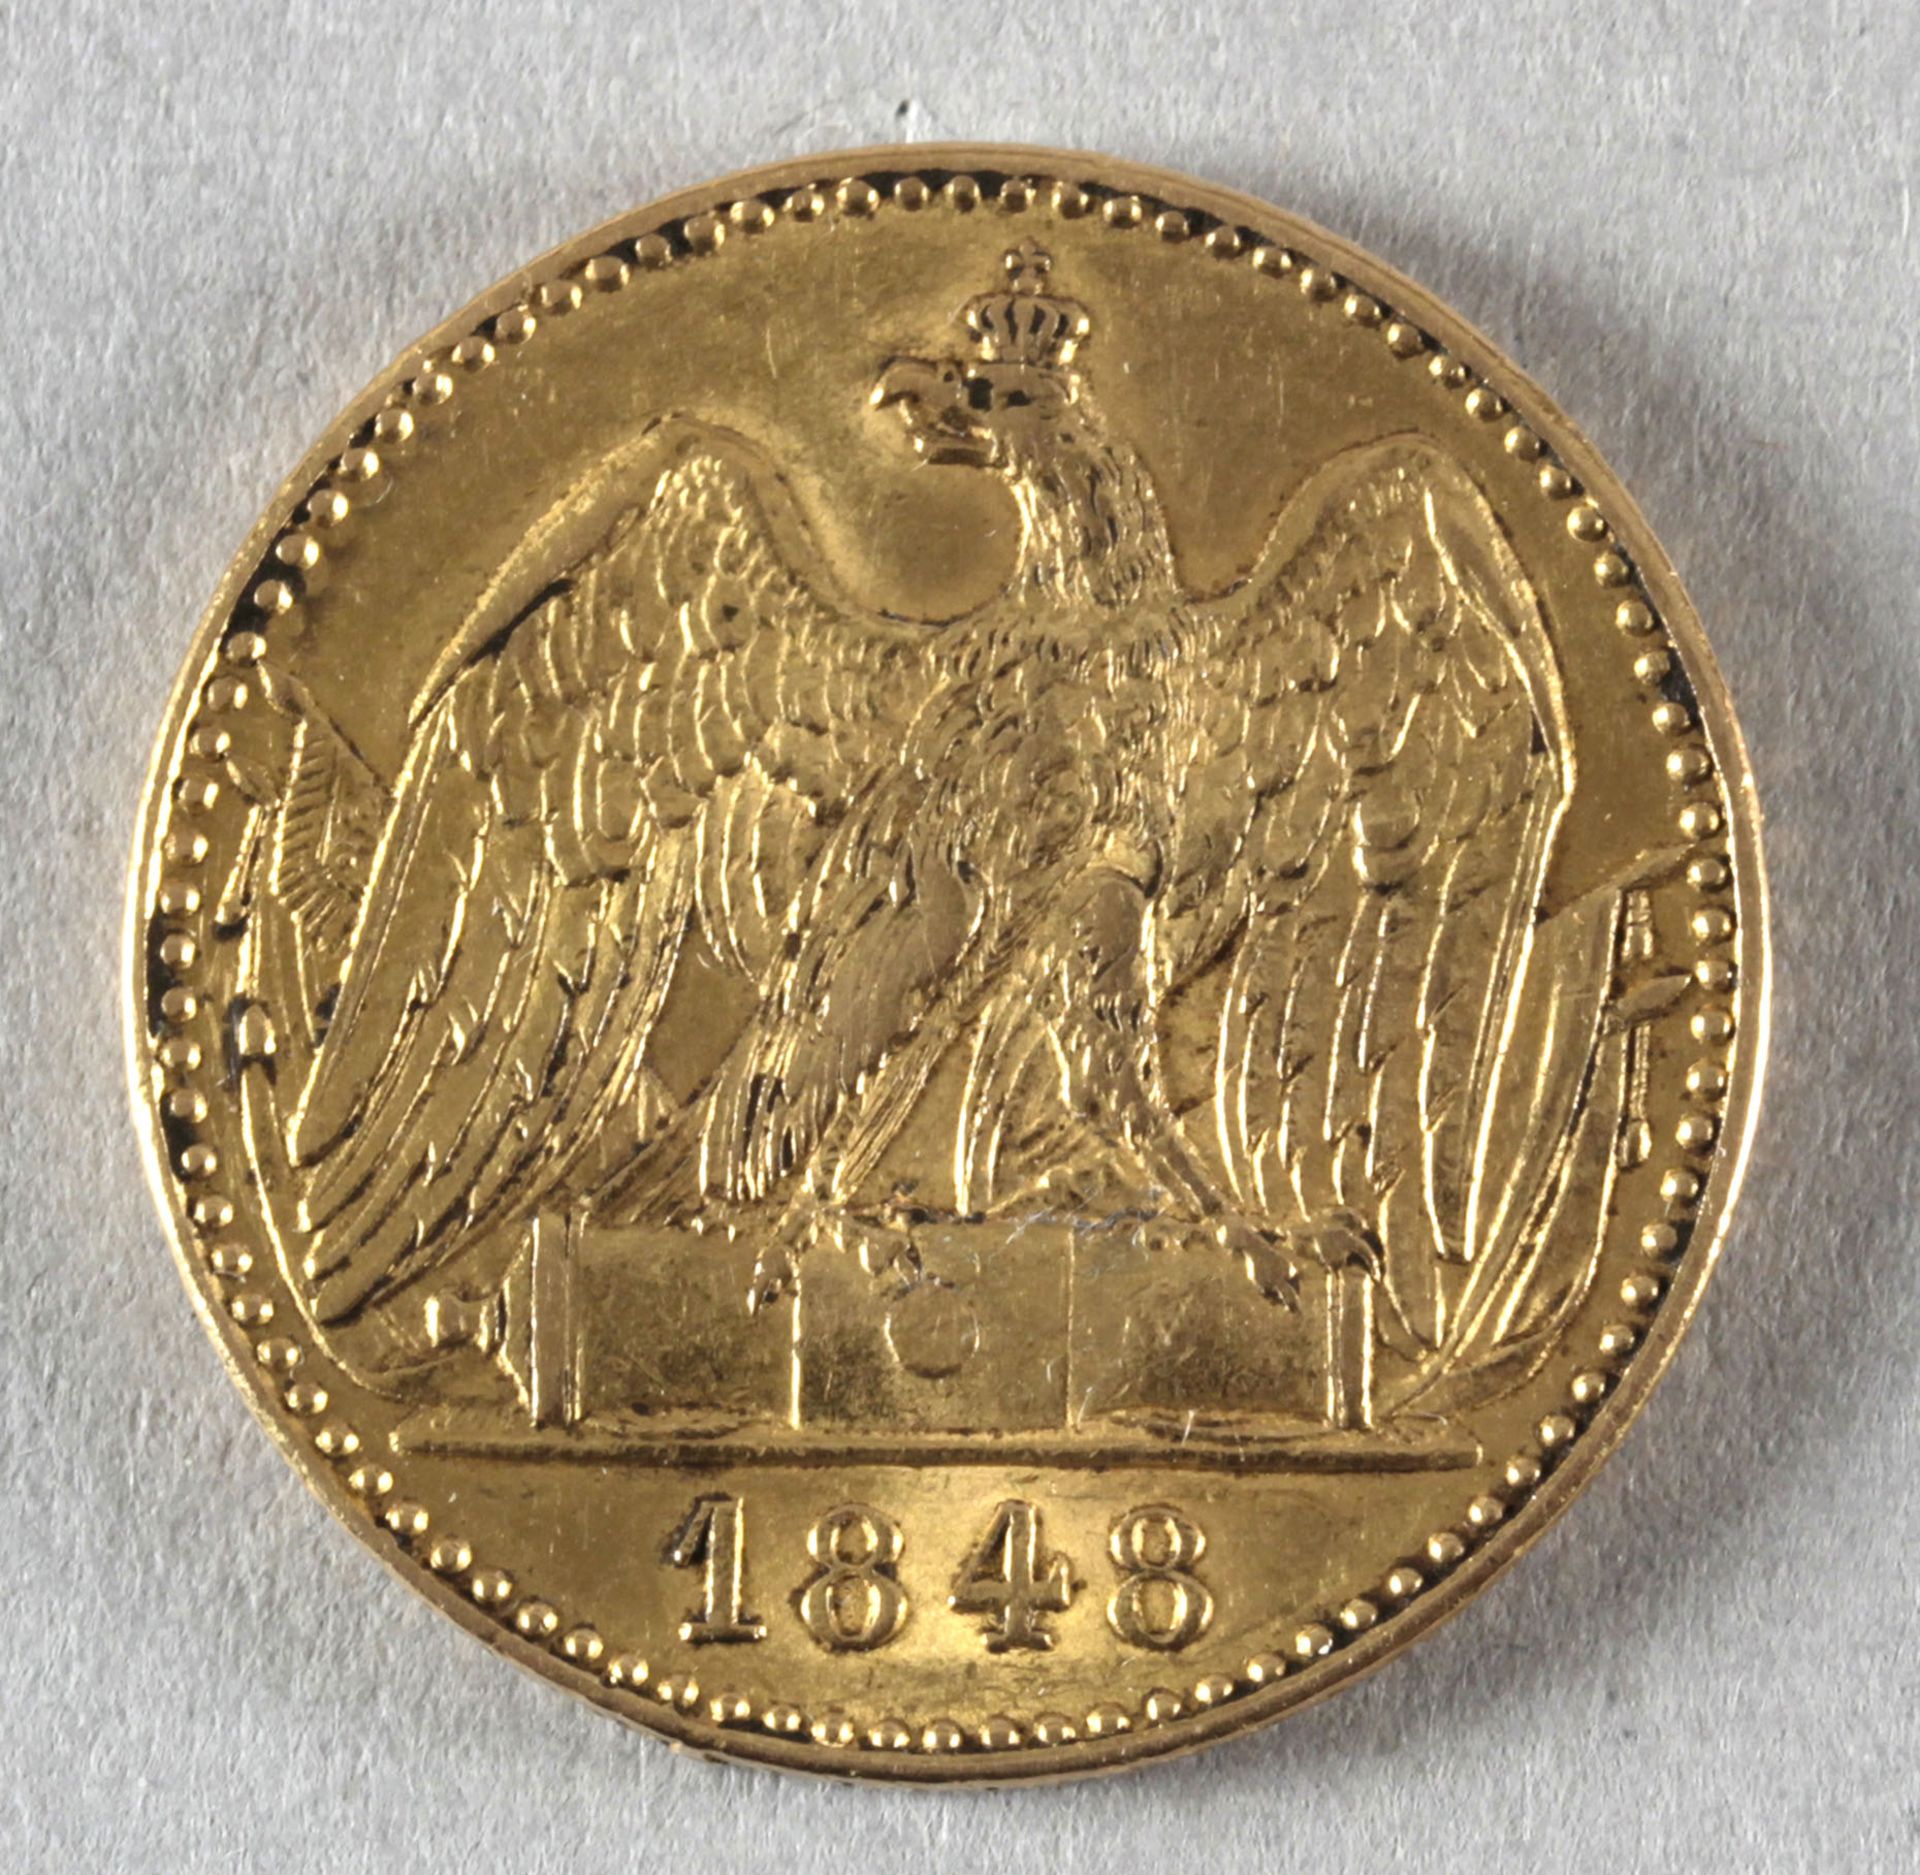 Goldmünze, Doppelter Friedrich d’Or, Preußen, 1848 A, Friedrich Wilhelm IV. - Image 2 of 2